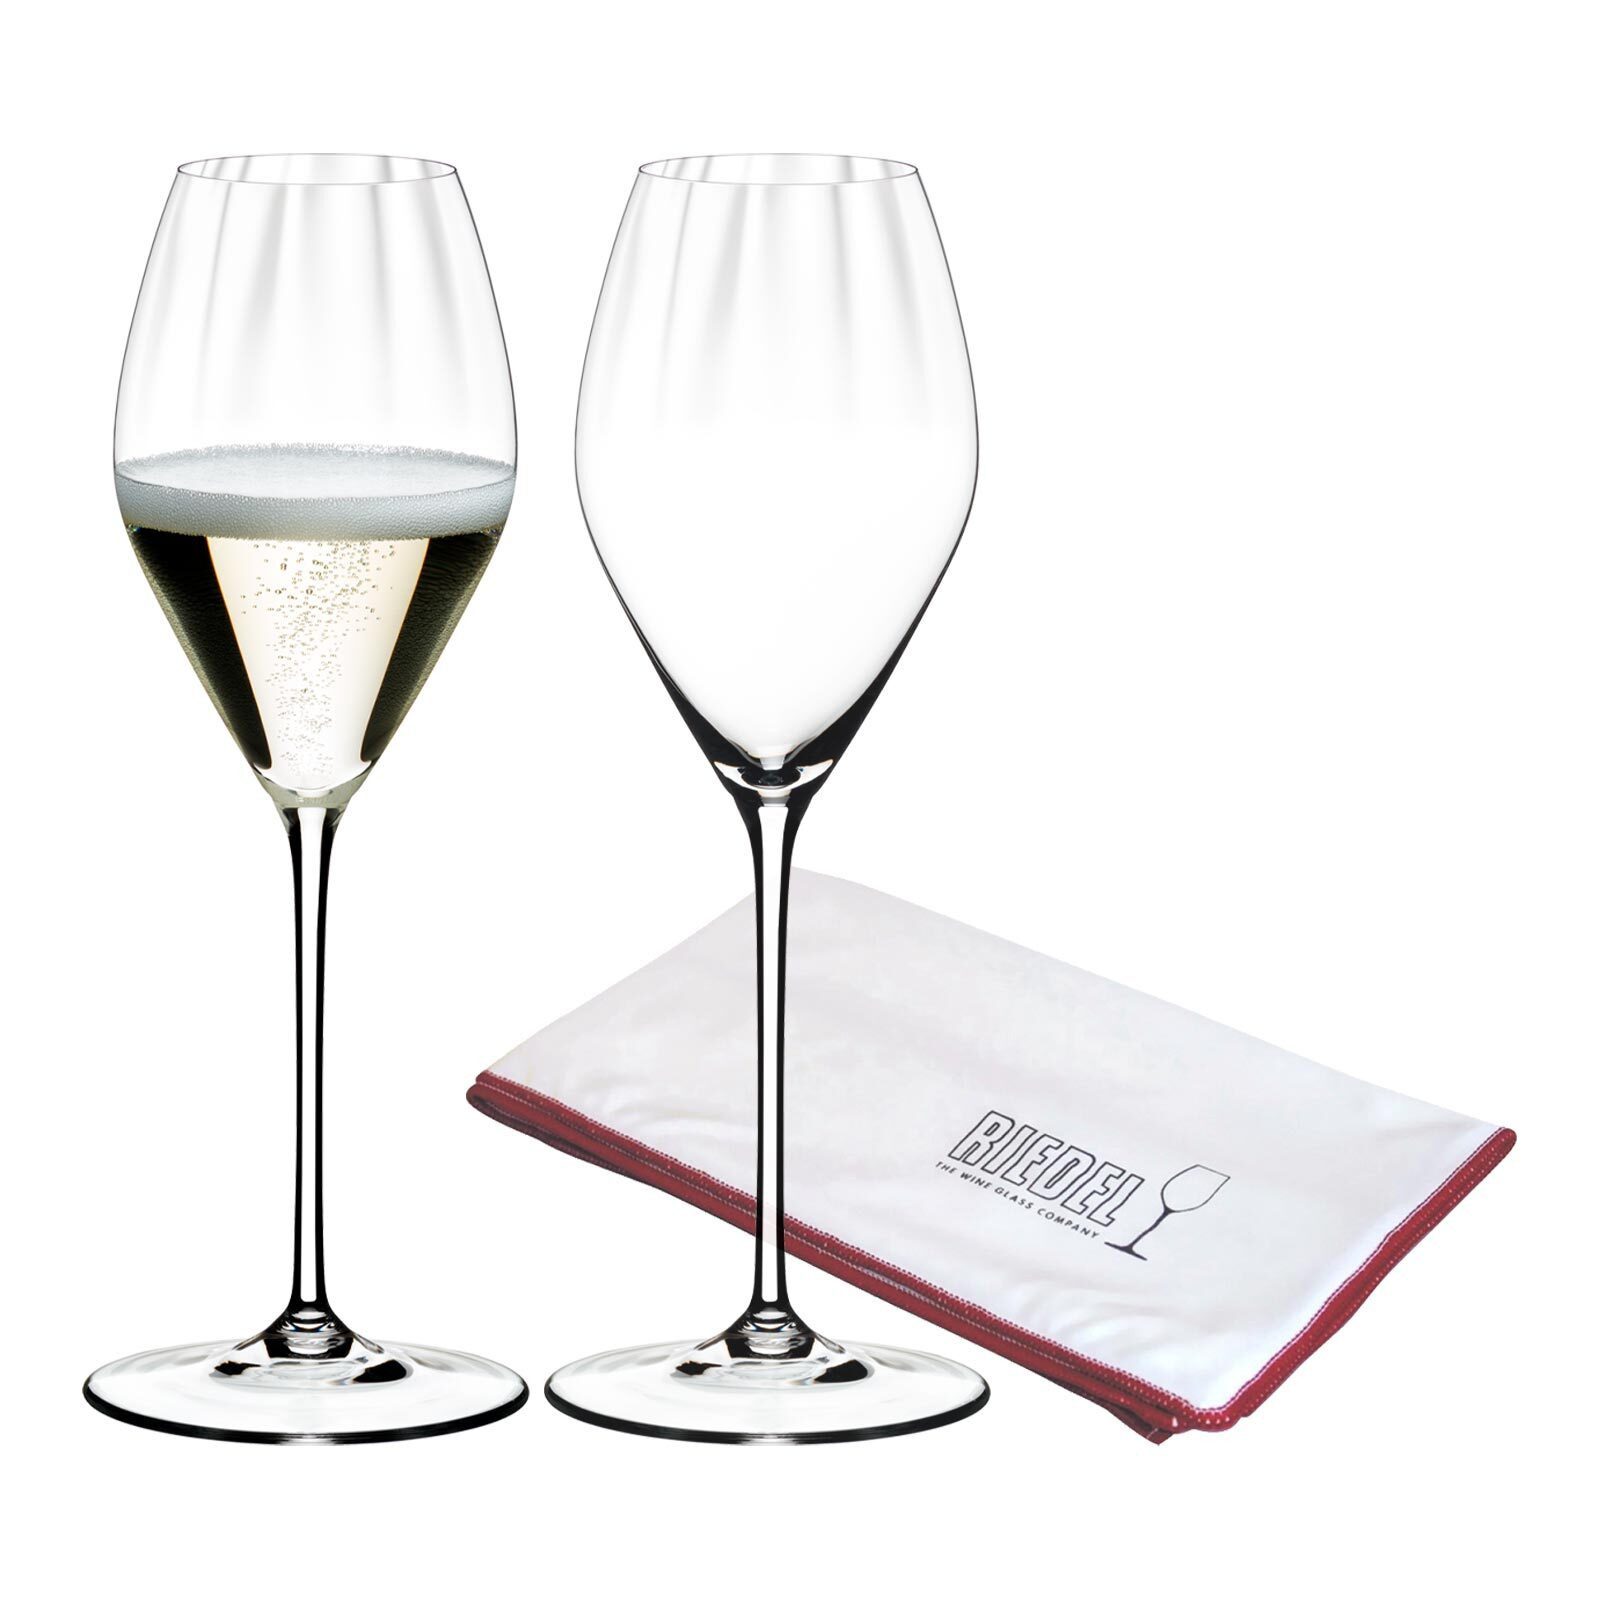 RIEDEL THE WINE GLASS COMPANY Champagnerglas Performance Champagnergläser inklusive Poliertuch, Glas